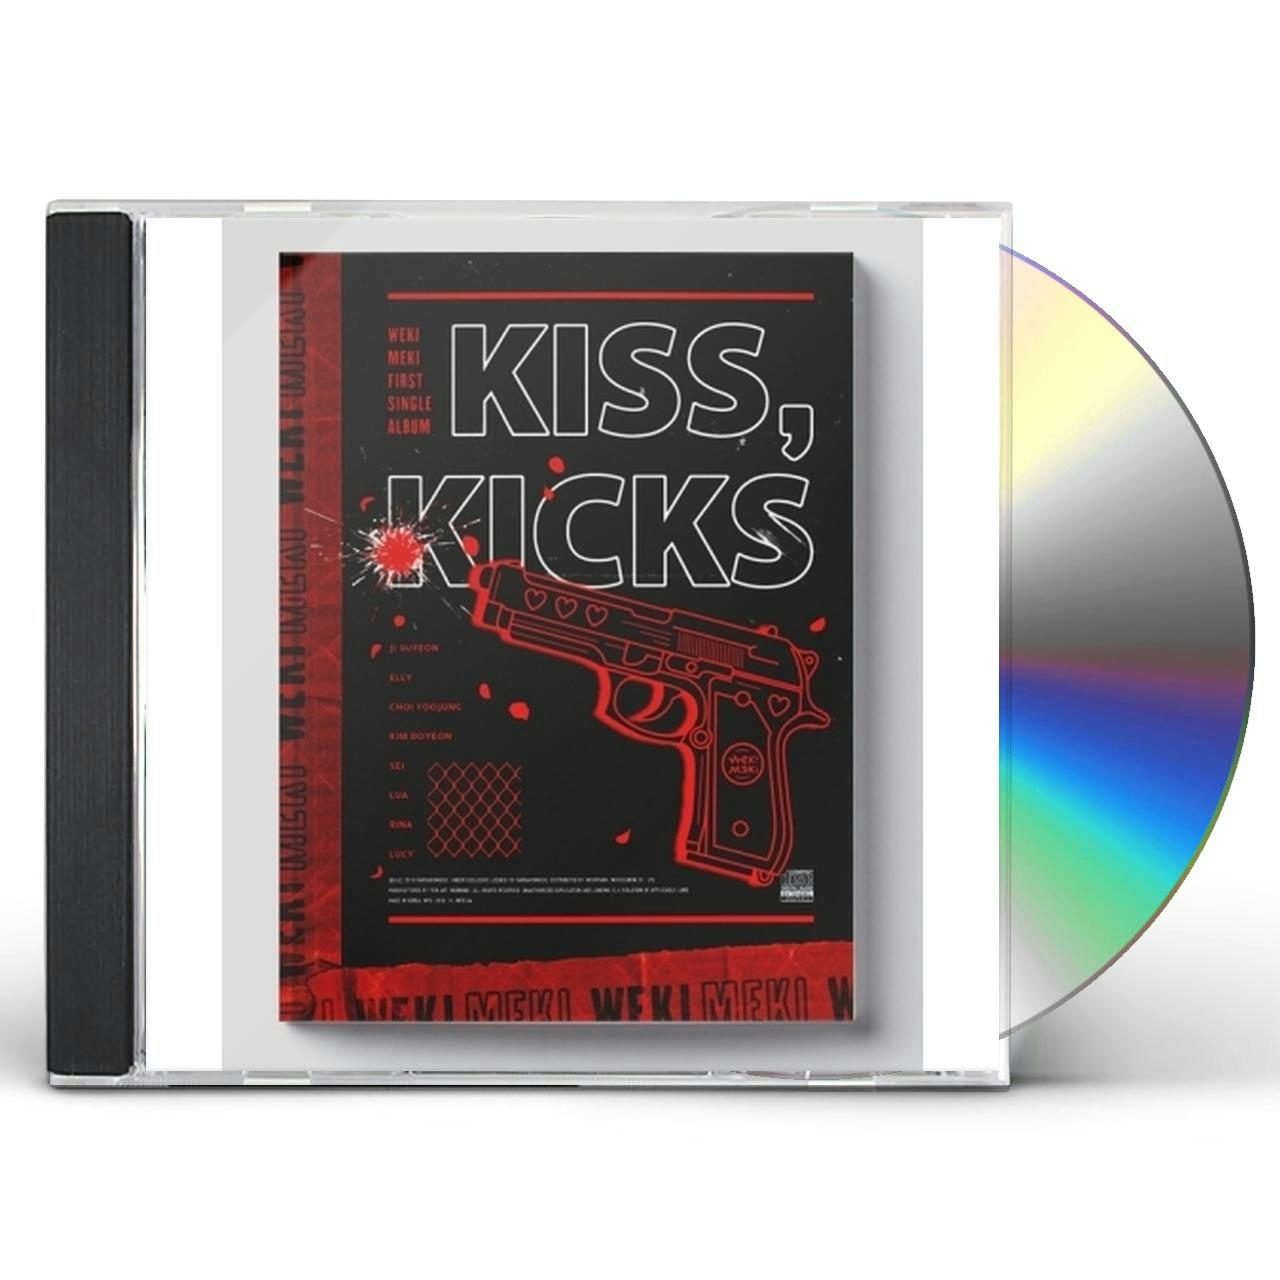 Weki Meki KISS, KICKS (KICK VERSION) CD